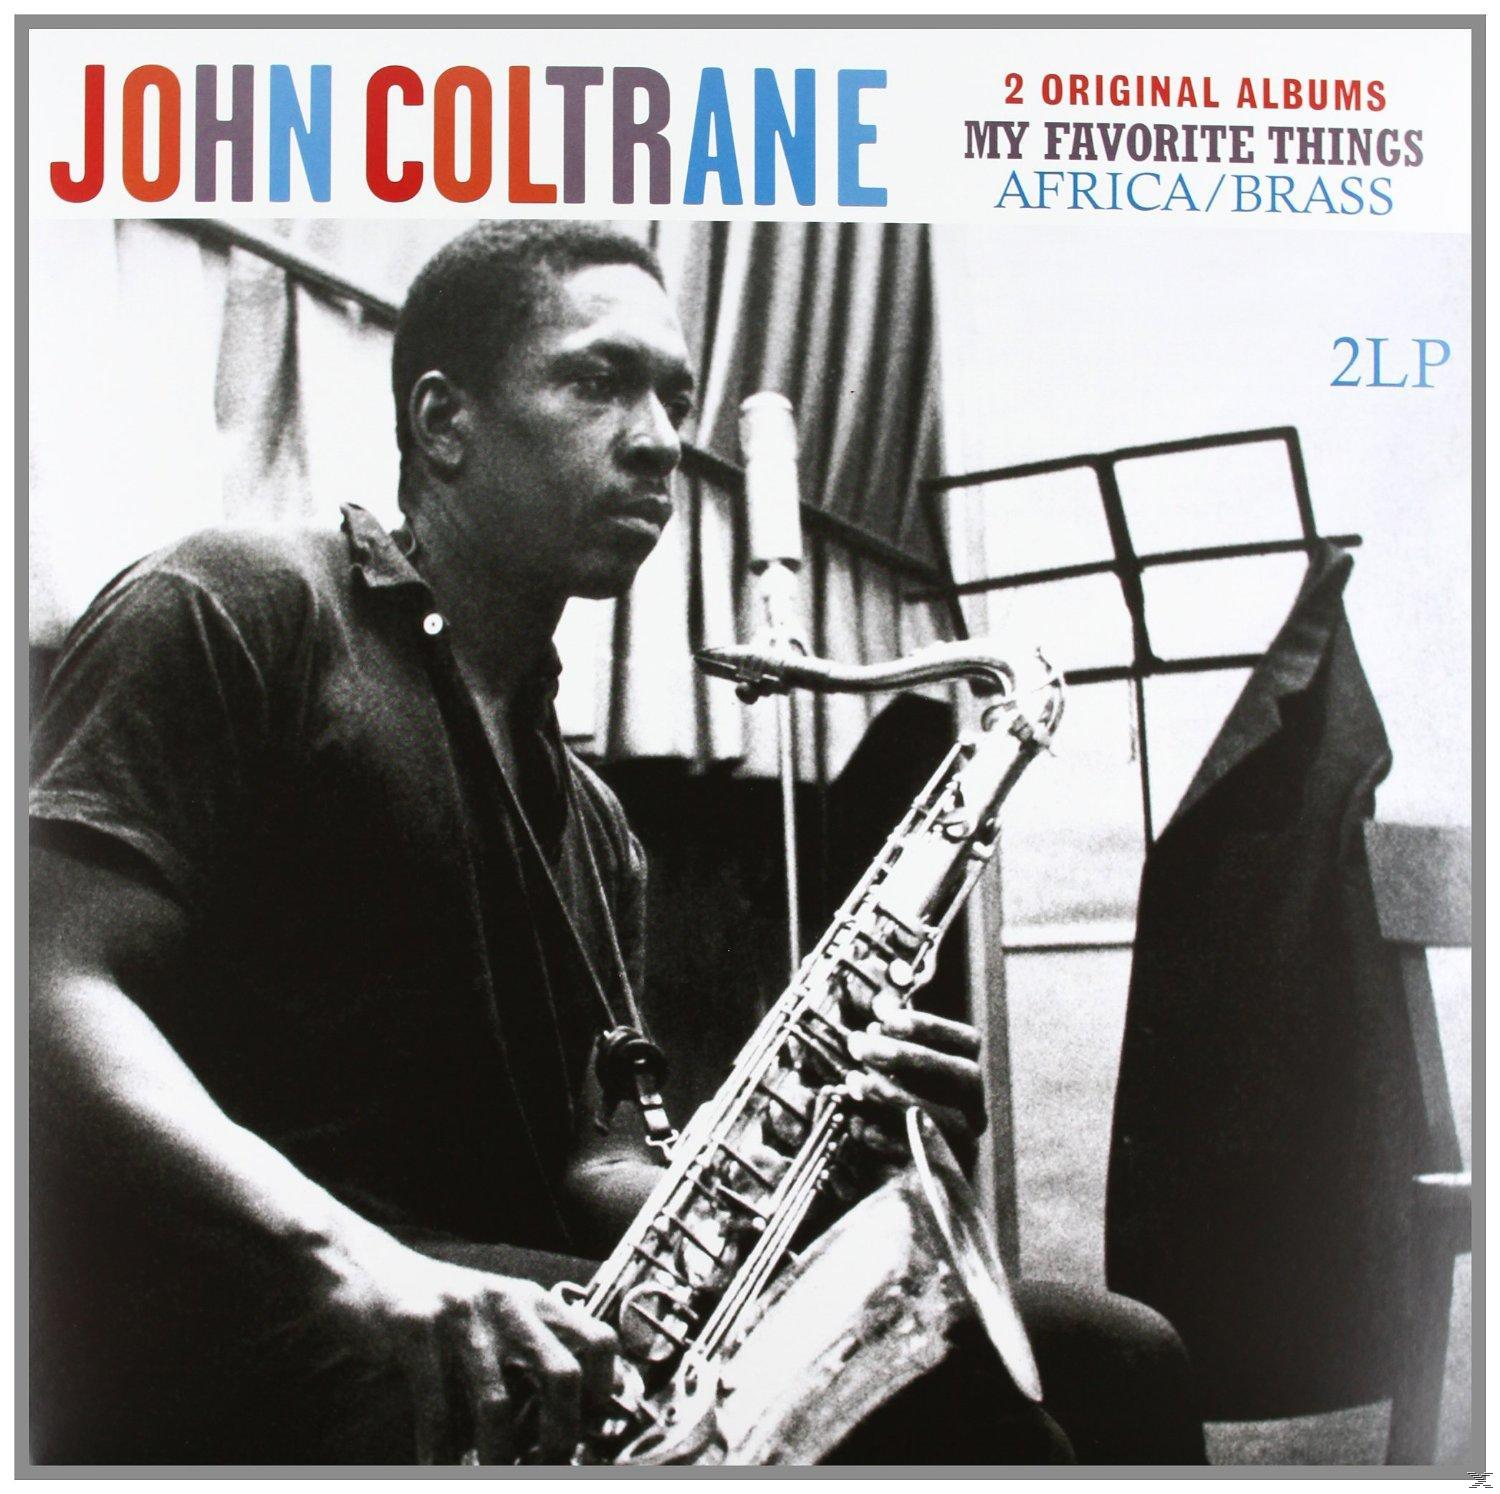 Things+Africa/Brass John - Coltrane Favorite - My (Vinyl)